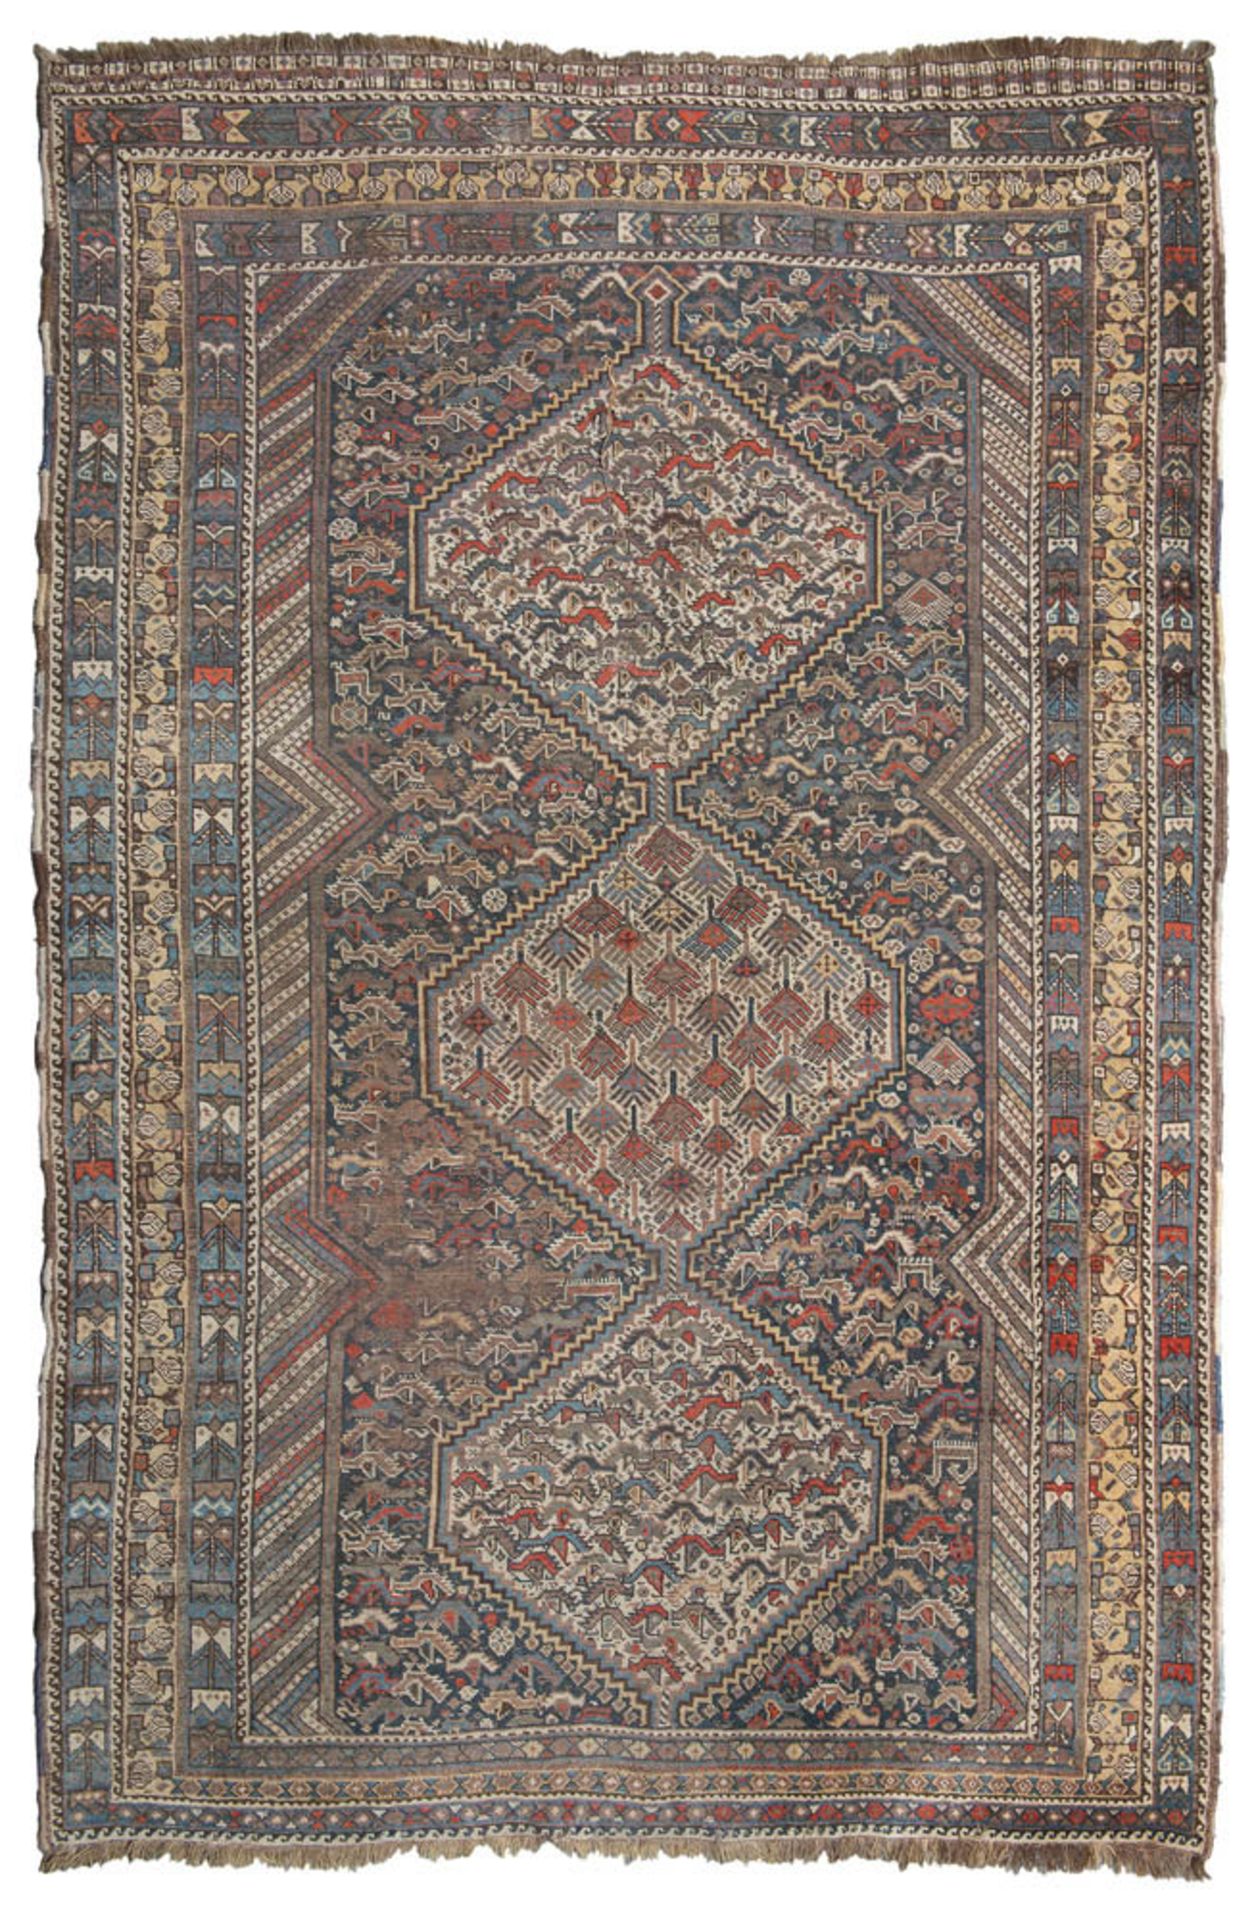 A RARE QASHQAI CARPET, LATE 19TH CENTURY Measures cm. 260 x 170. Rapè, abraches, defects. RARO